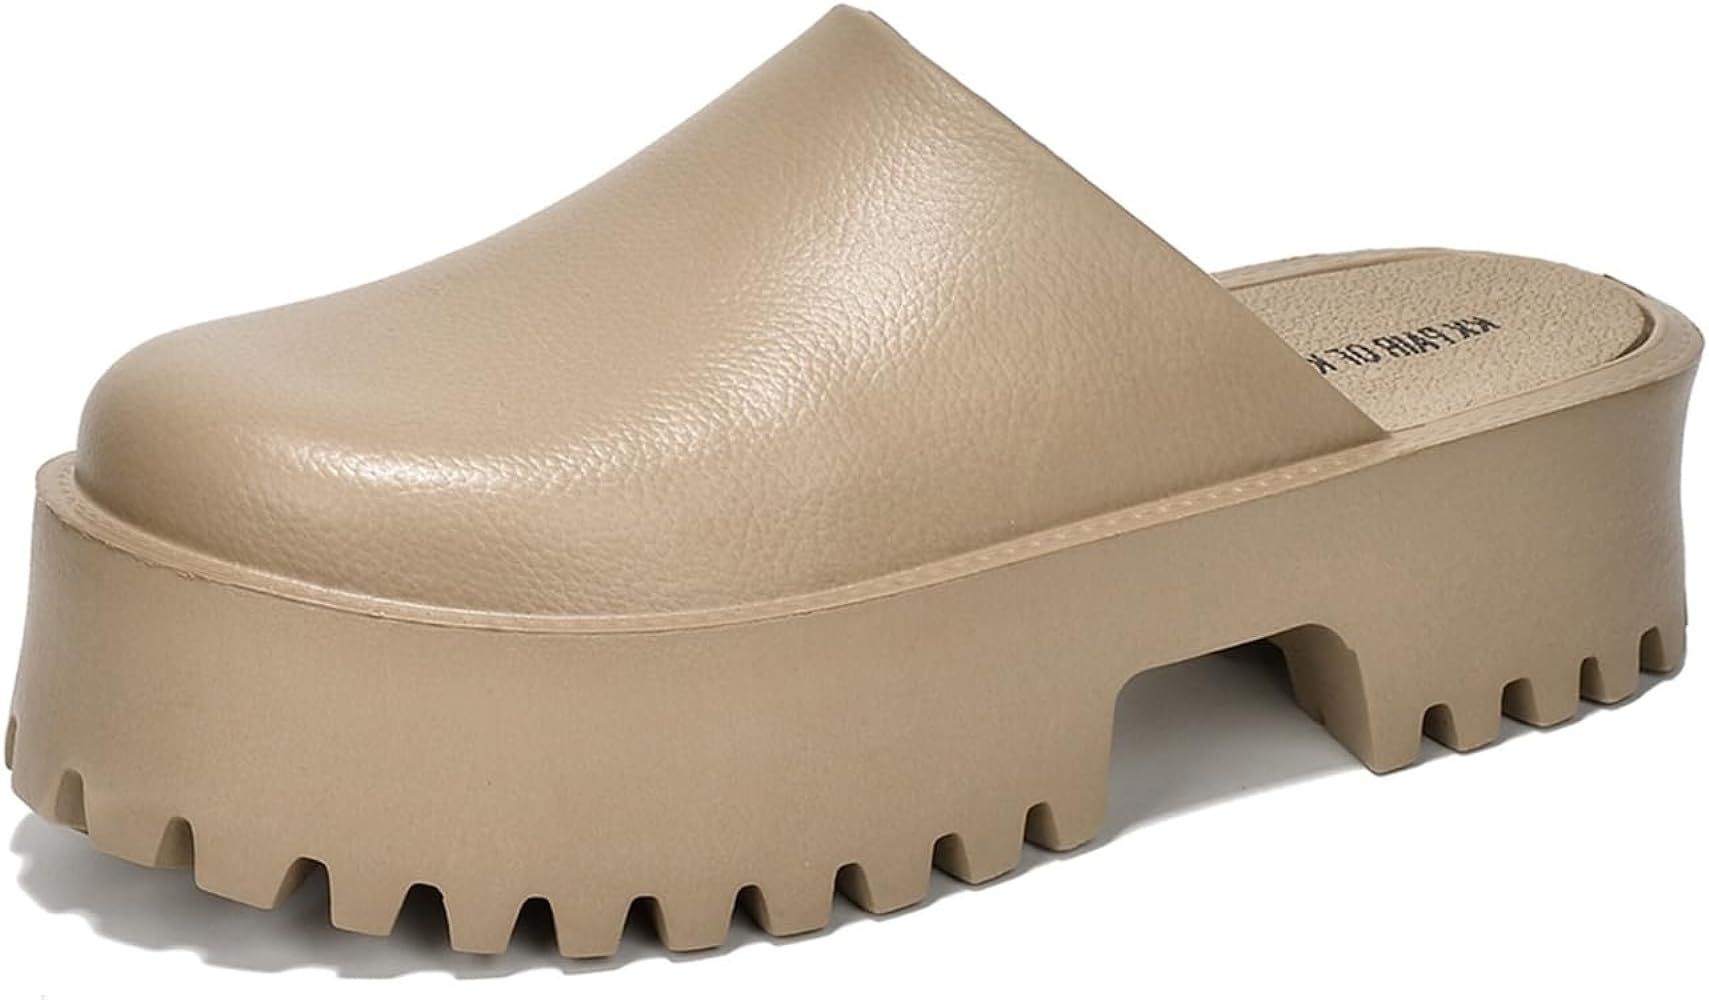 KK PAIR OF KINGS Lightweight Mule Clog Platform Sandals for Women - Comfortable, Non-Slip, Waterp... | Amazon (US)